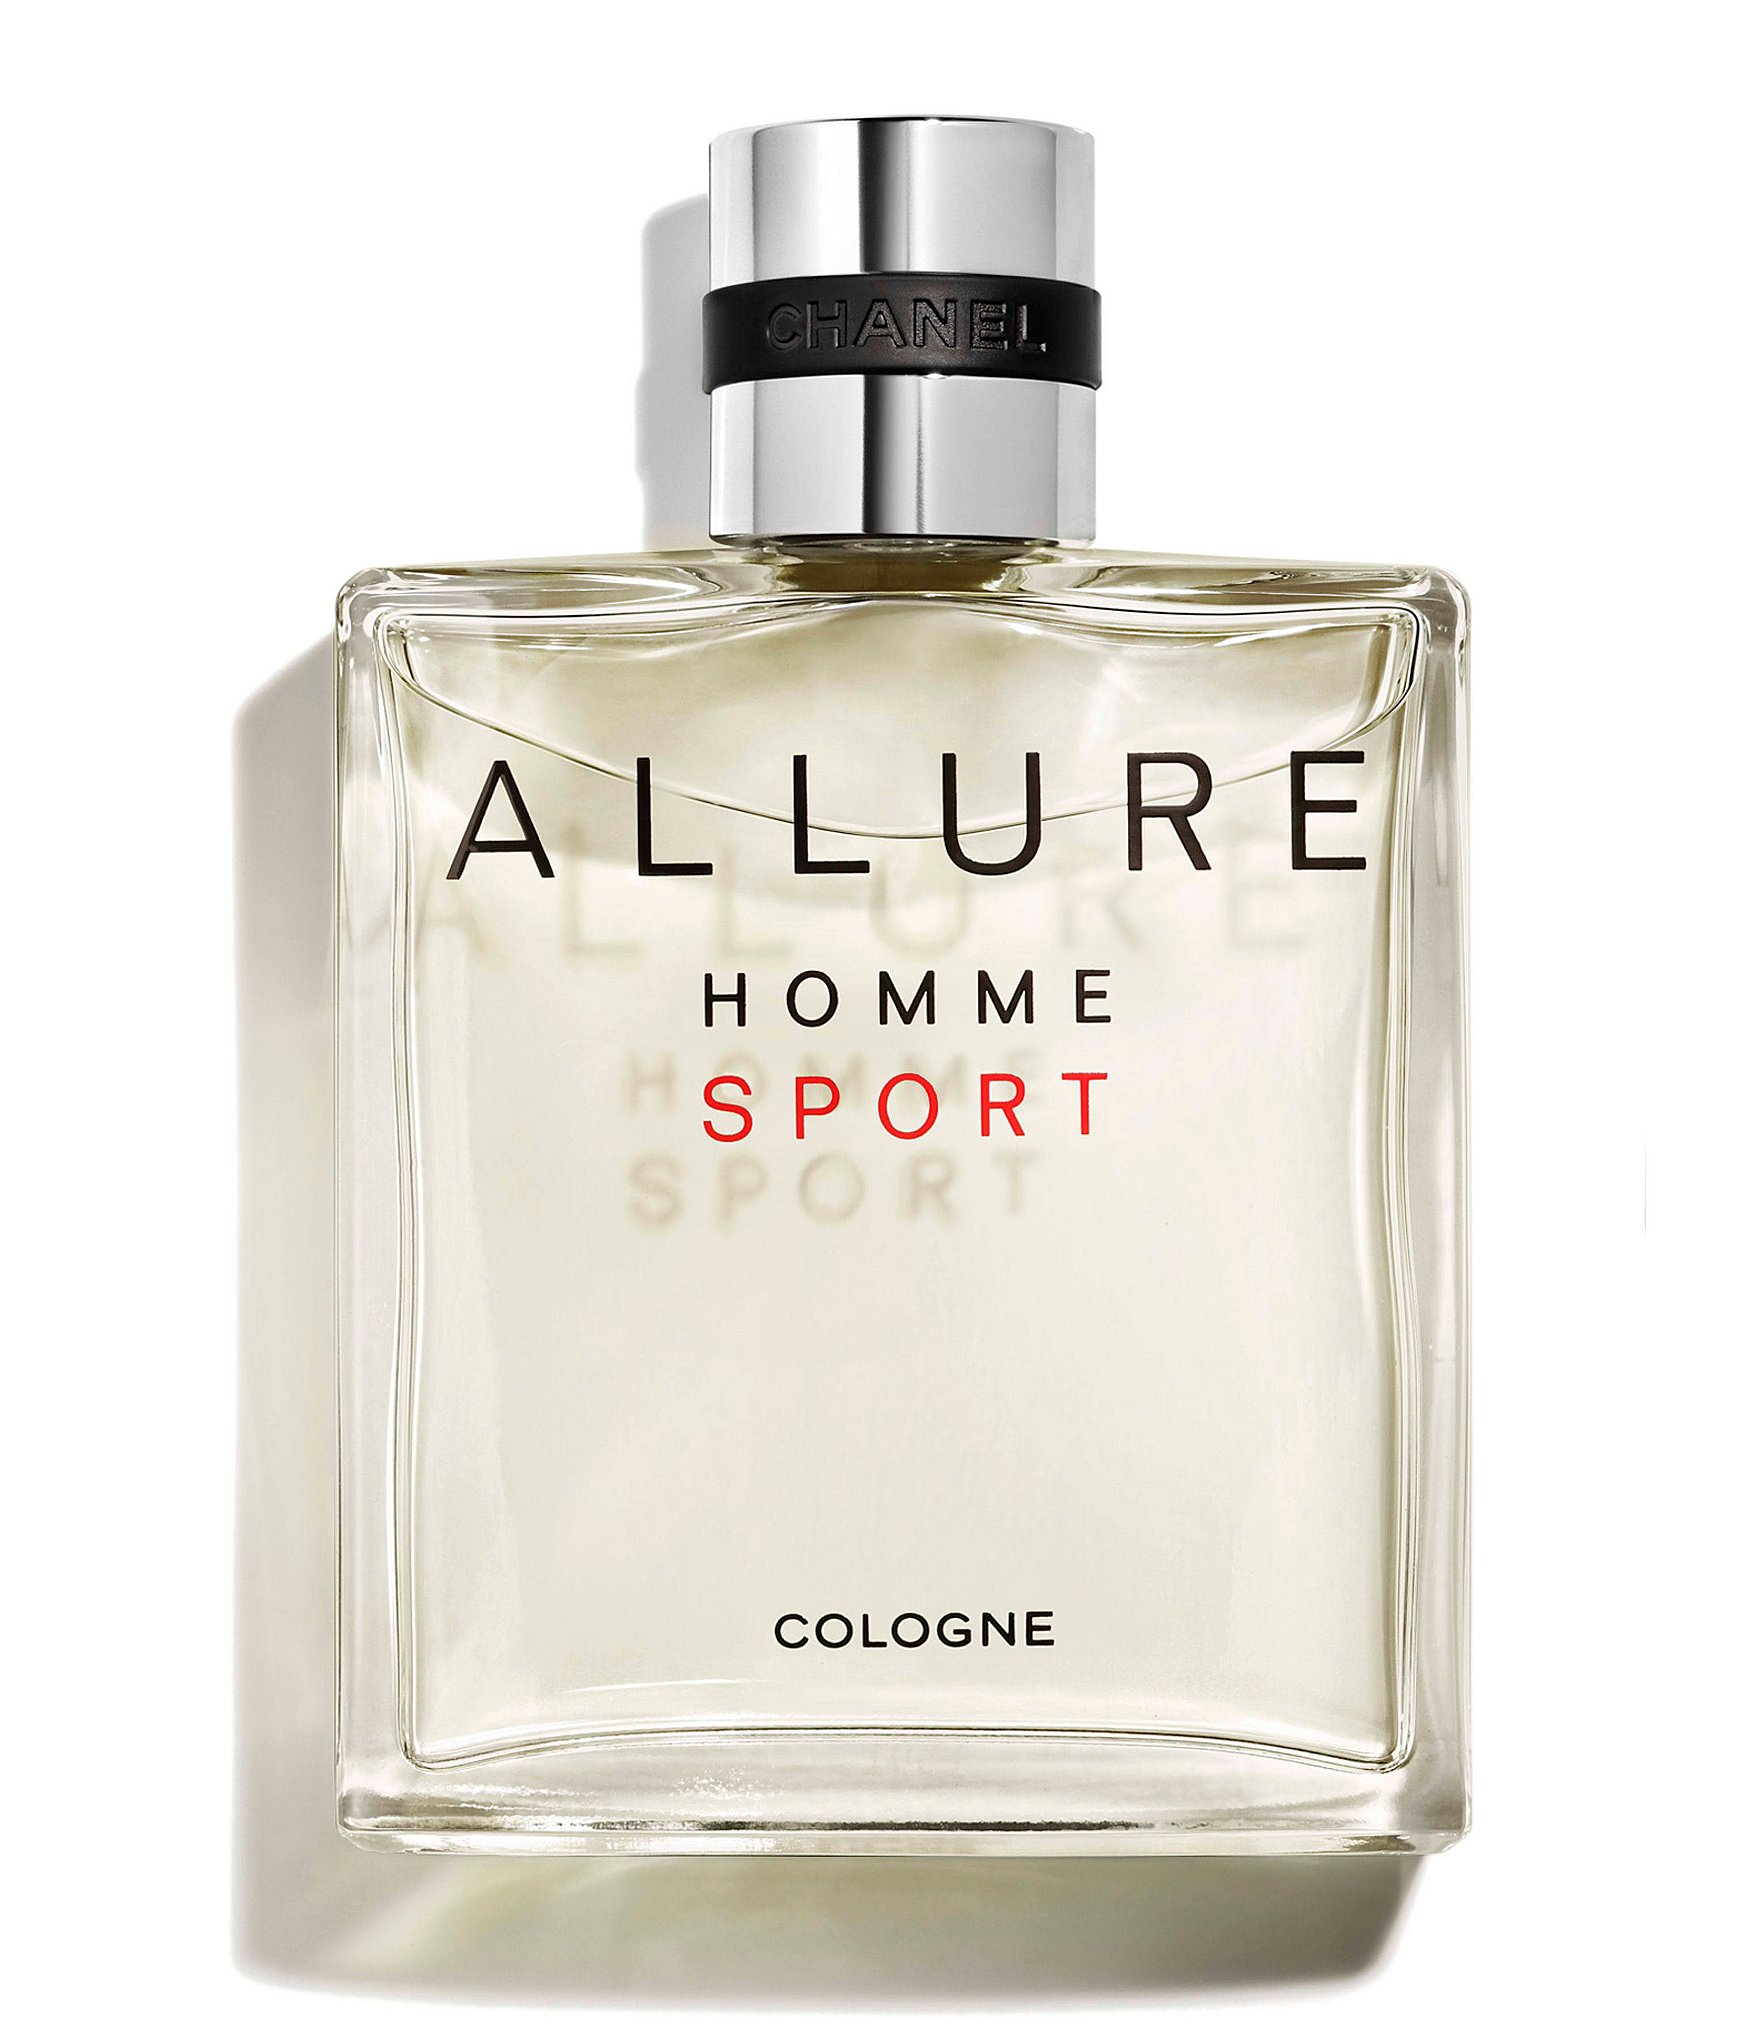 home sport chanel perfume